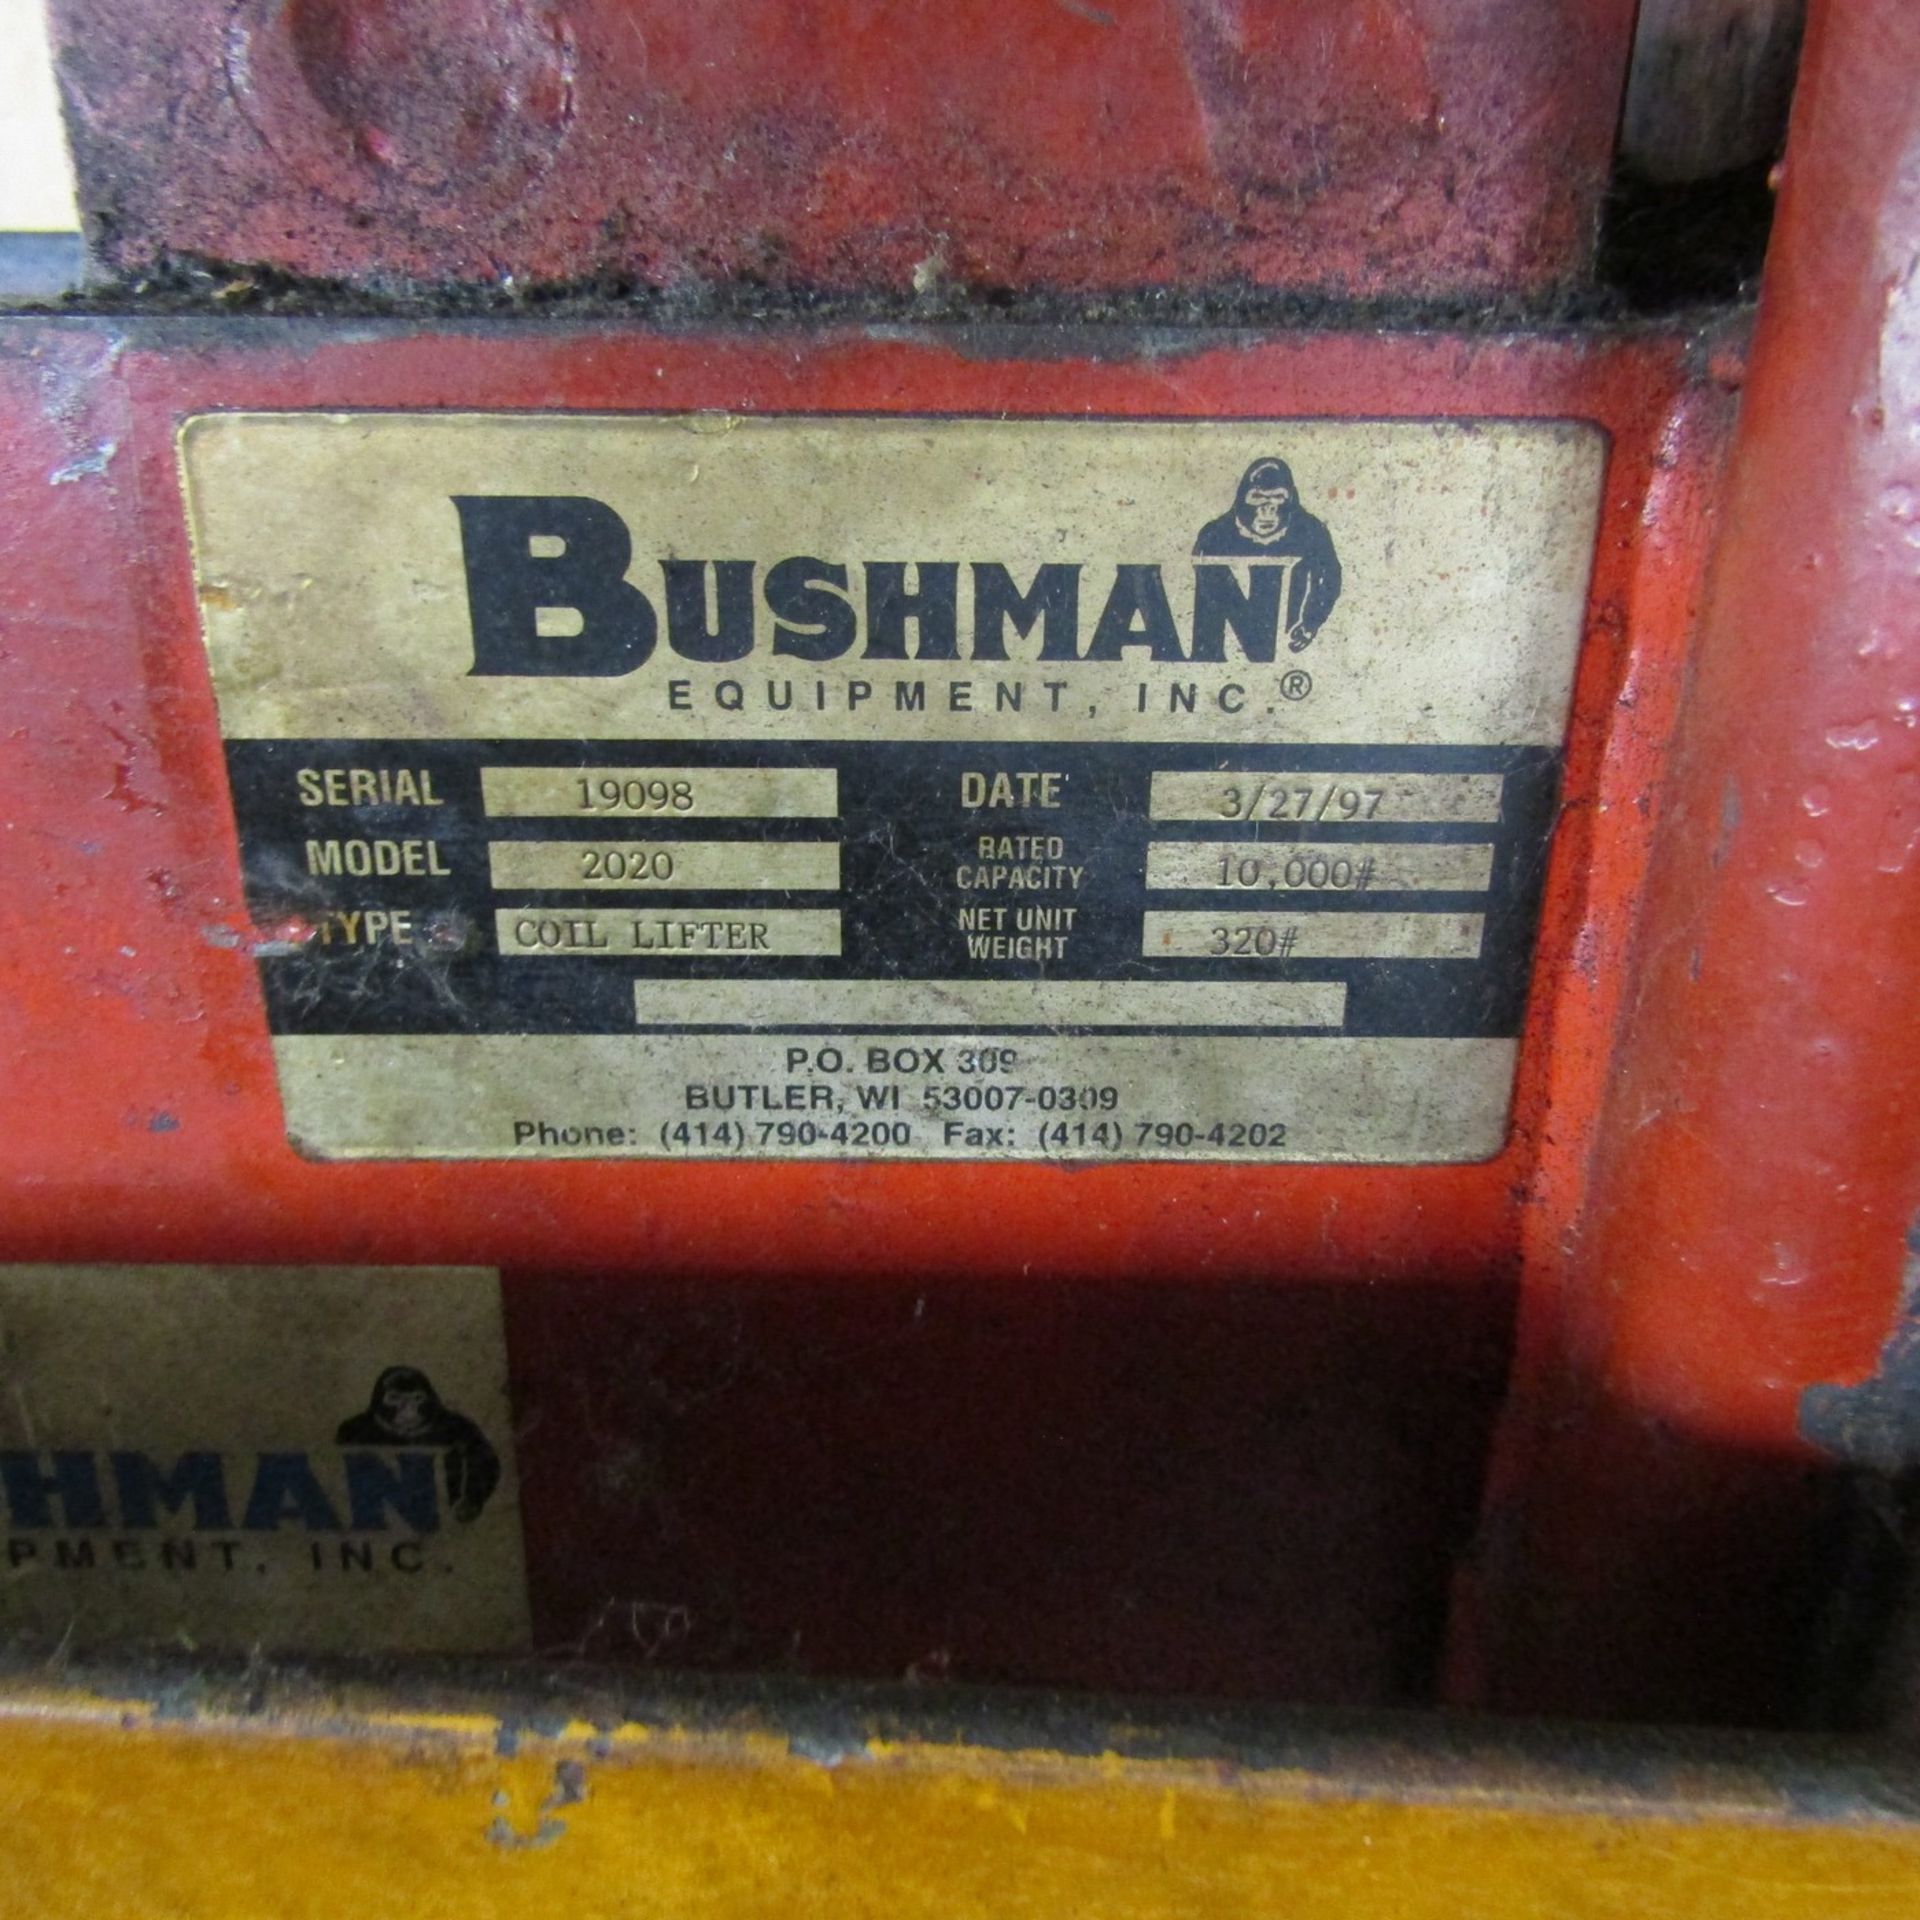 Bushman 5-Ton Cap. Model 2020 Coil Lift, S/N: 19098; 10,000 lb. Rating, with Cart - Image 2 of 2